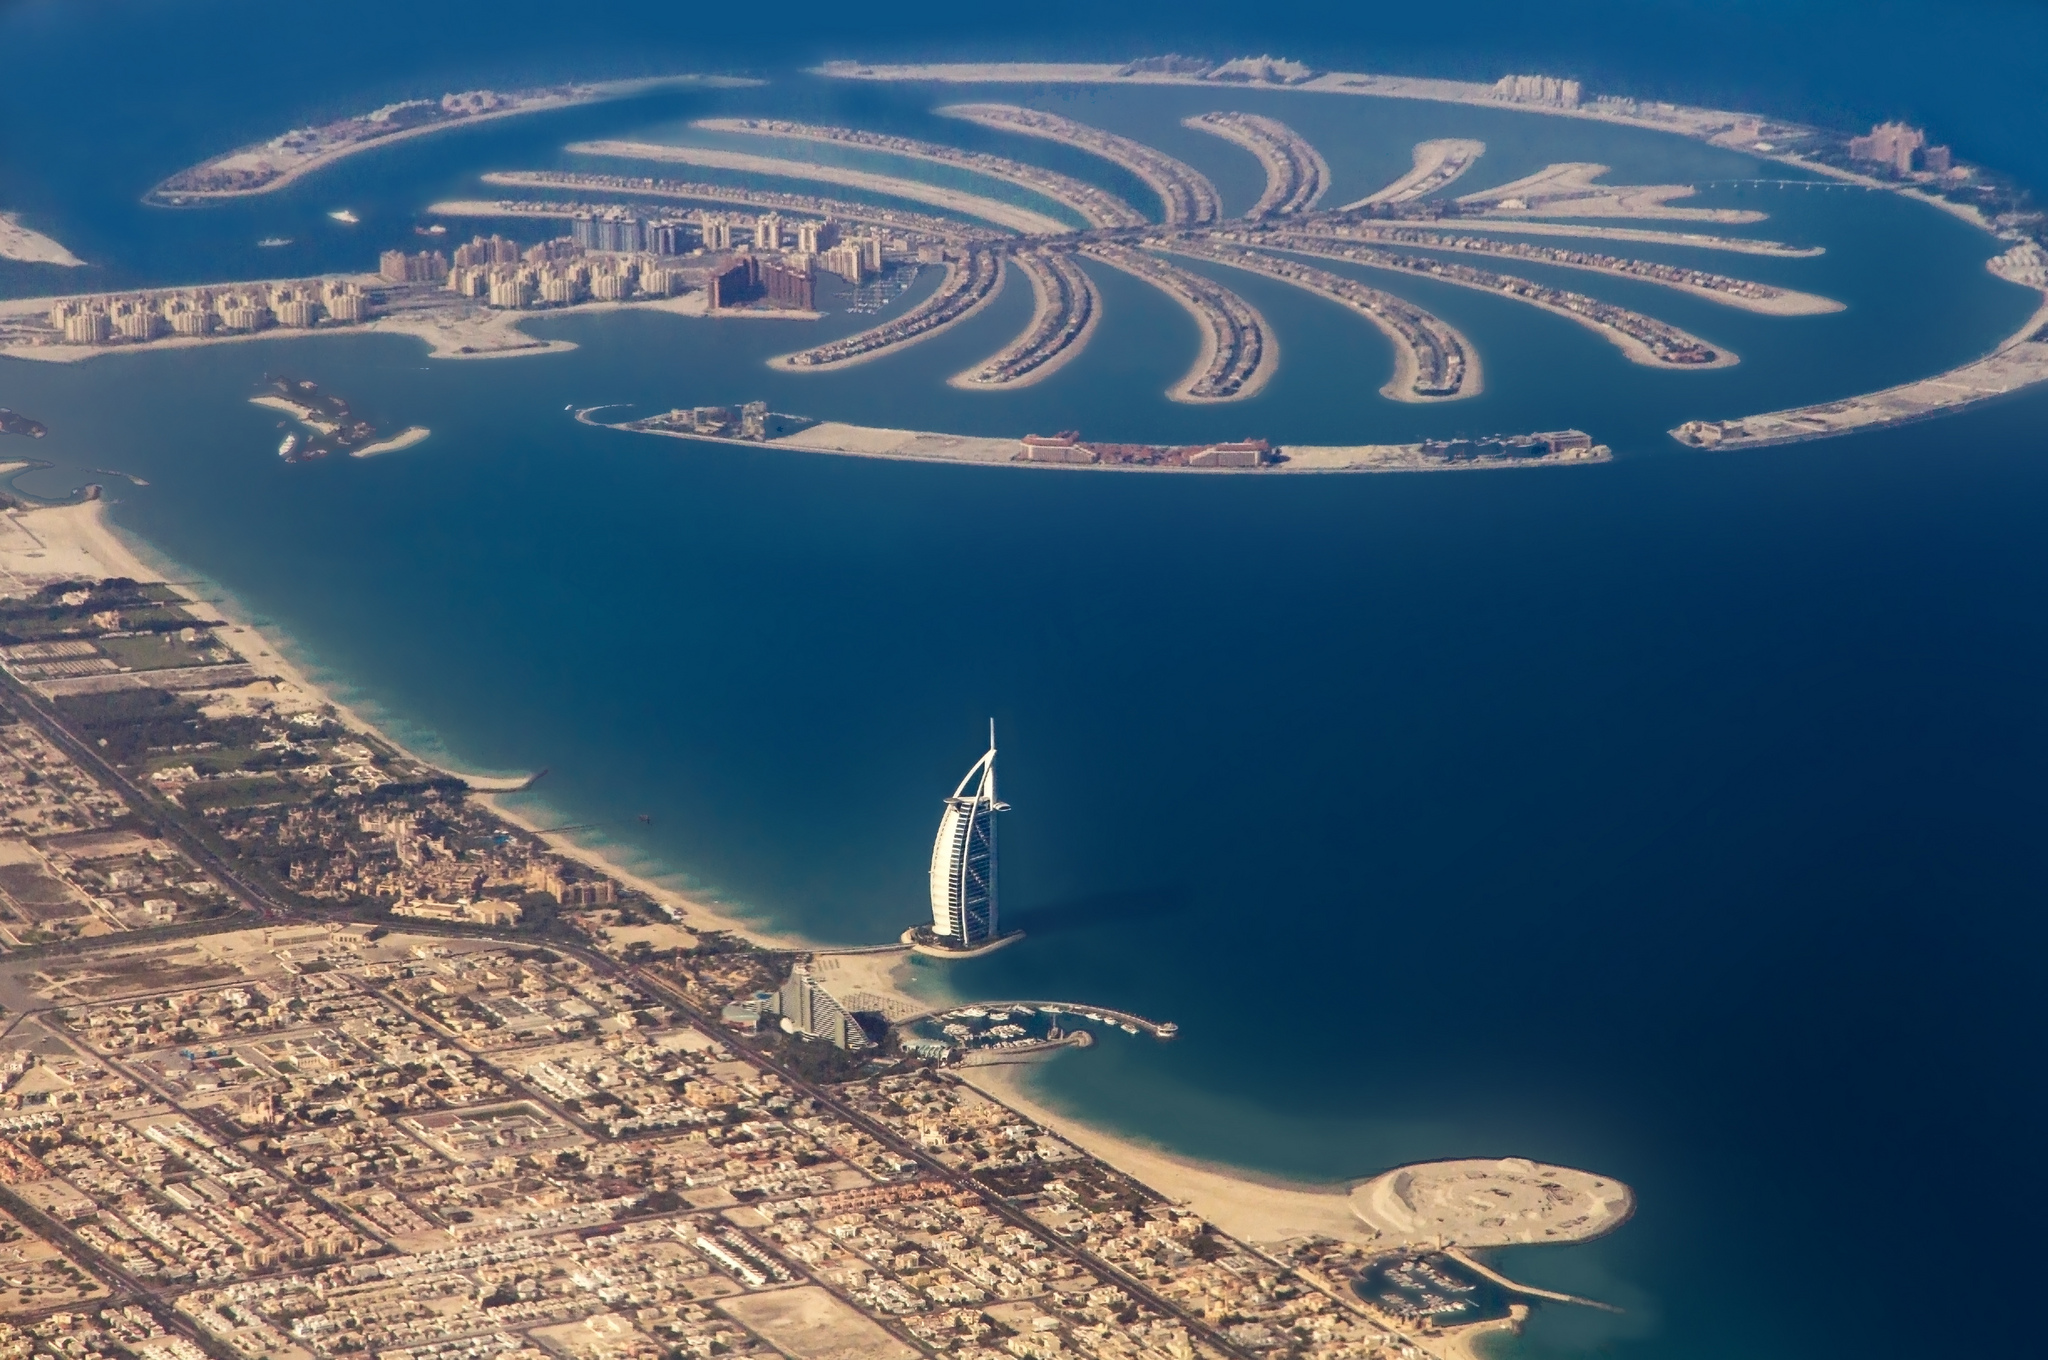 Top 5 Places to Visit in Dubai - YourAmazingPlaces.com